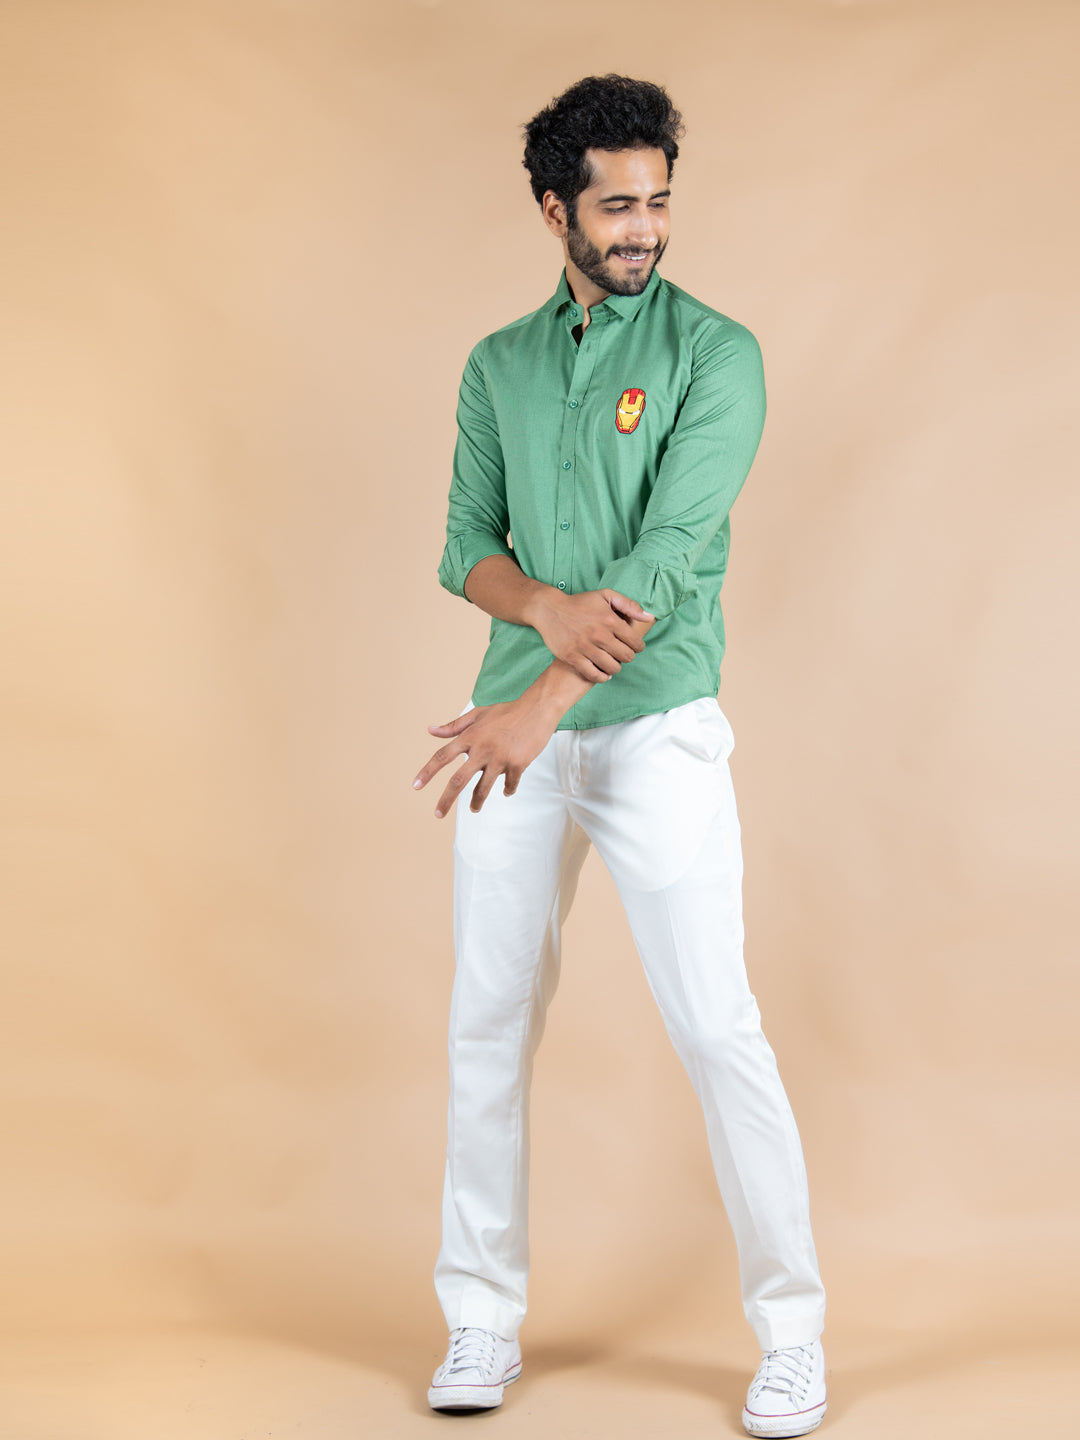 Guy Green Shirt White Pants Sun Stock Photo 609013241 | Shutterstock